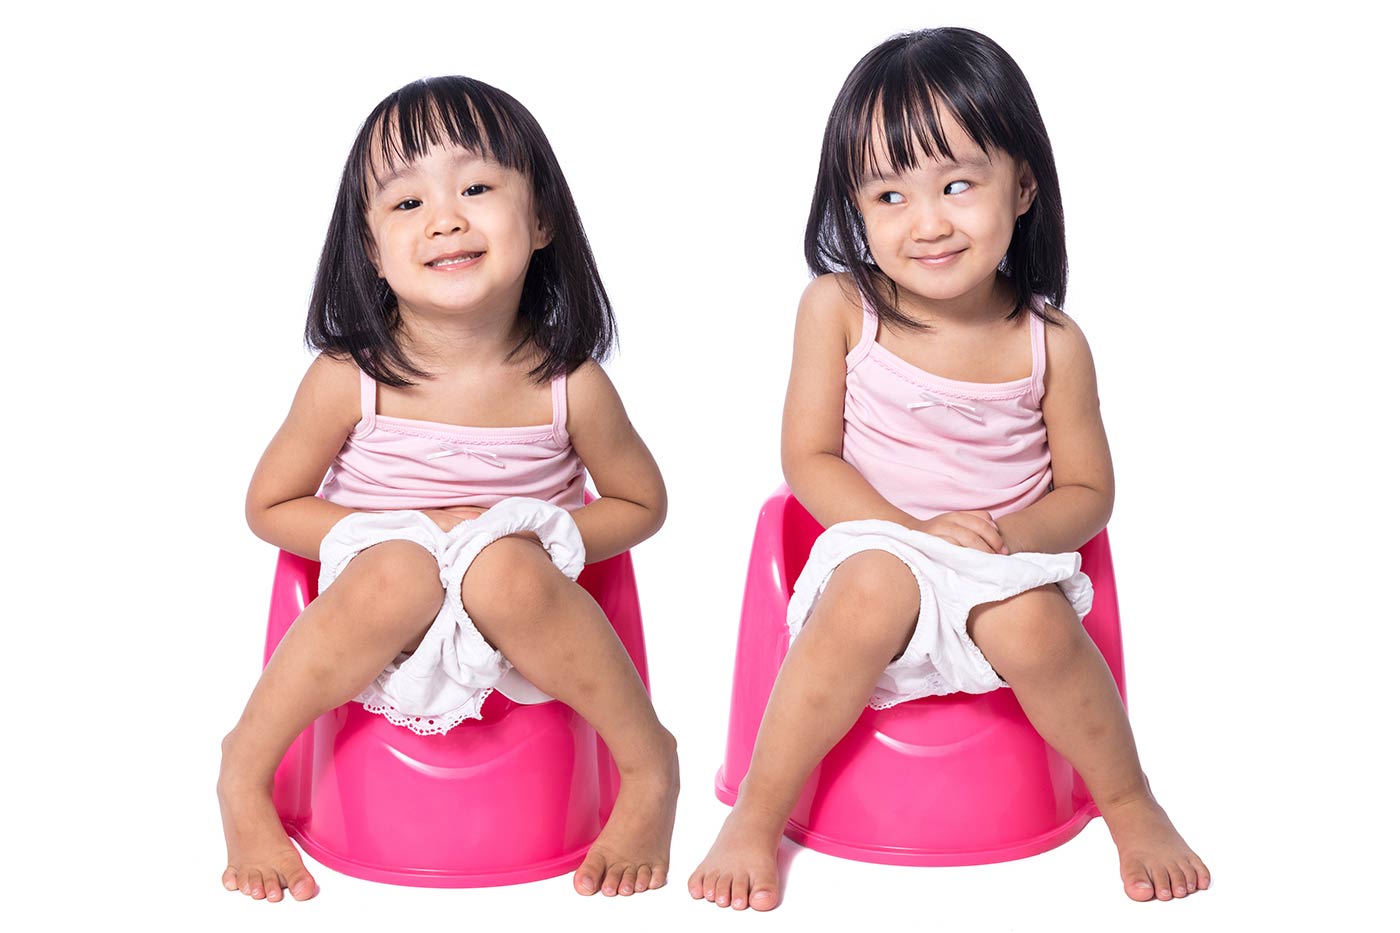 potty training baby city Potty training twins developmental delay toddler led pun excuse